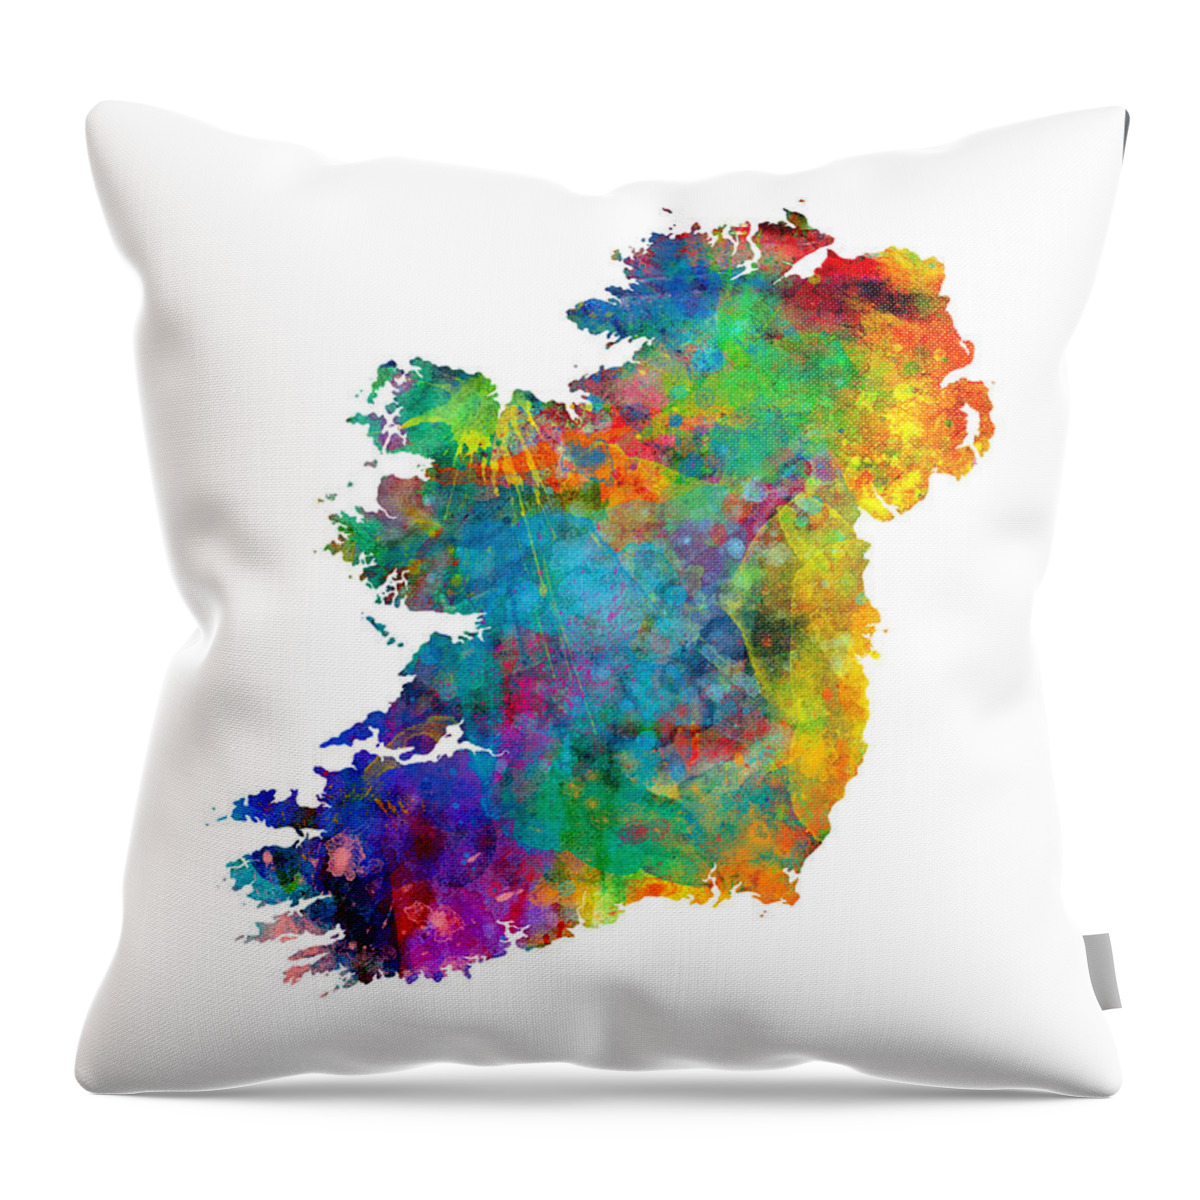 Ireland Throw Pillow featuring the digital art Ireland Watercolor Map #1 by Michael Tompsett